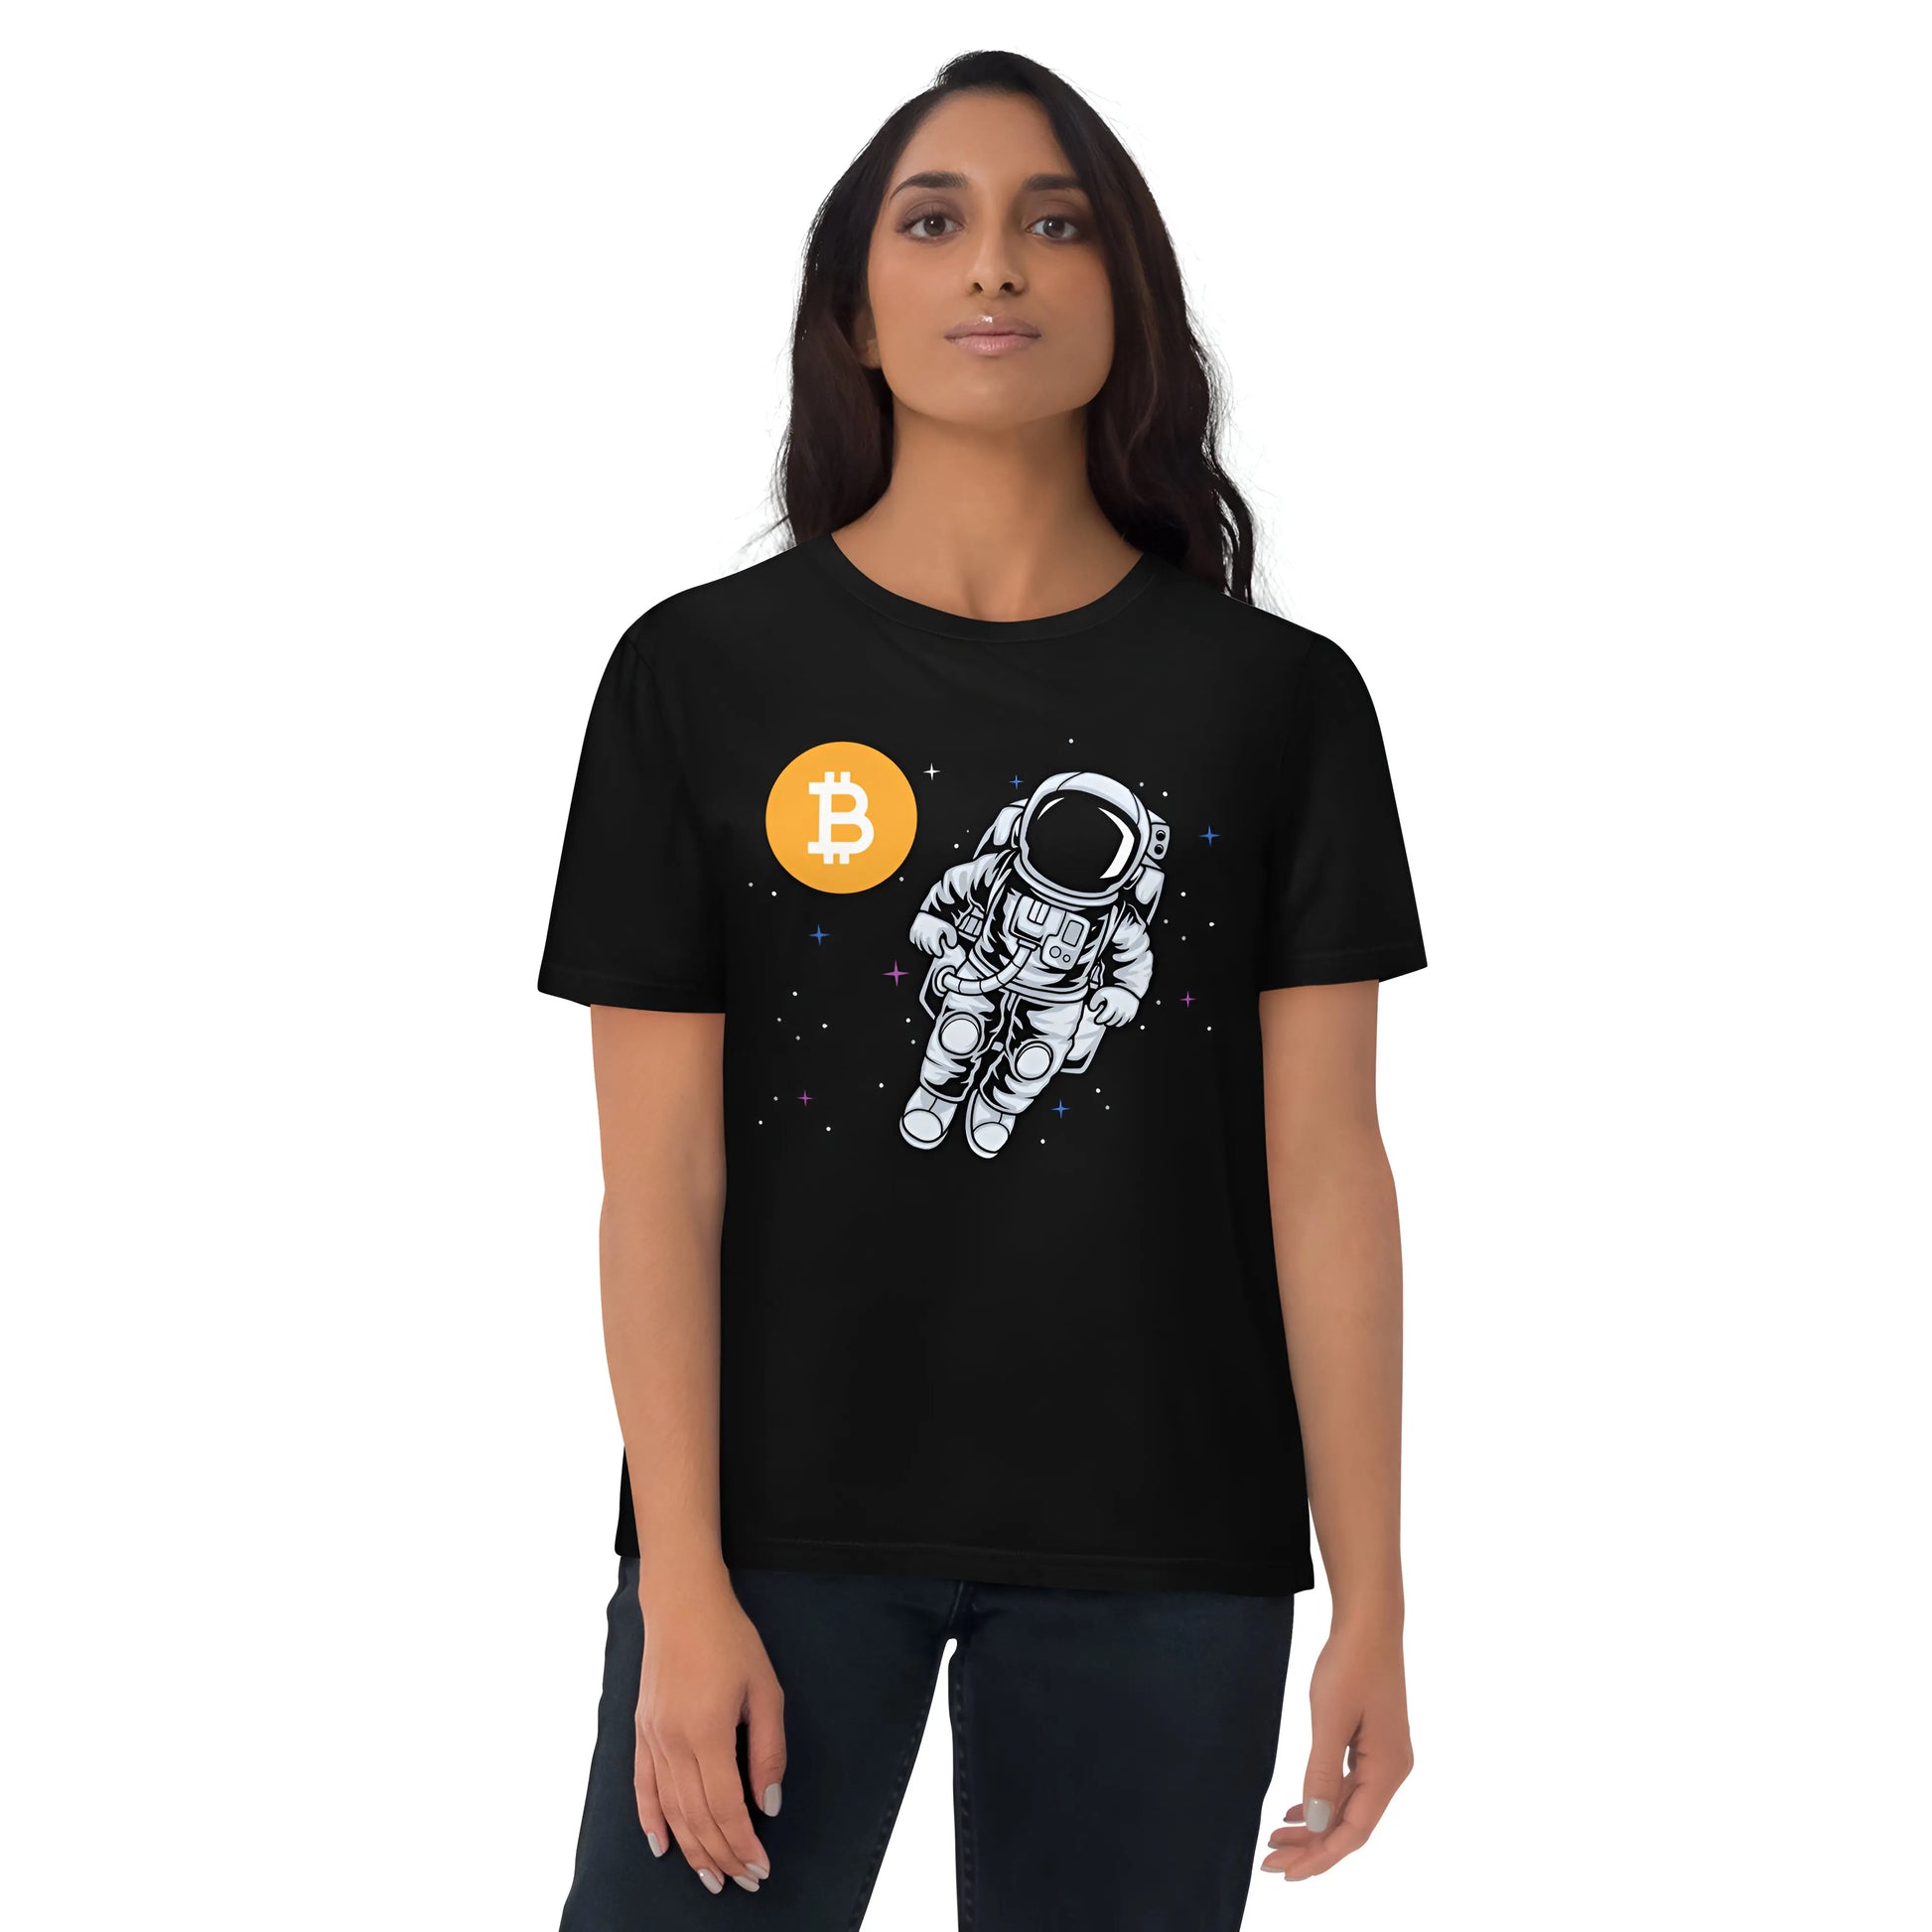 Bitcoin Moonwalk - Premium Unisex Organic Cotton Bitcoin T-shirt Black